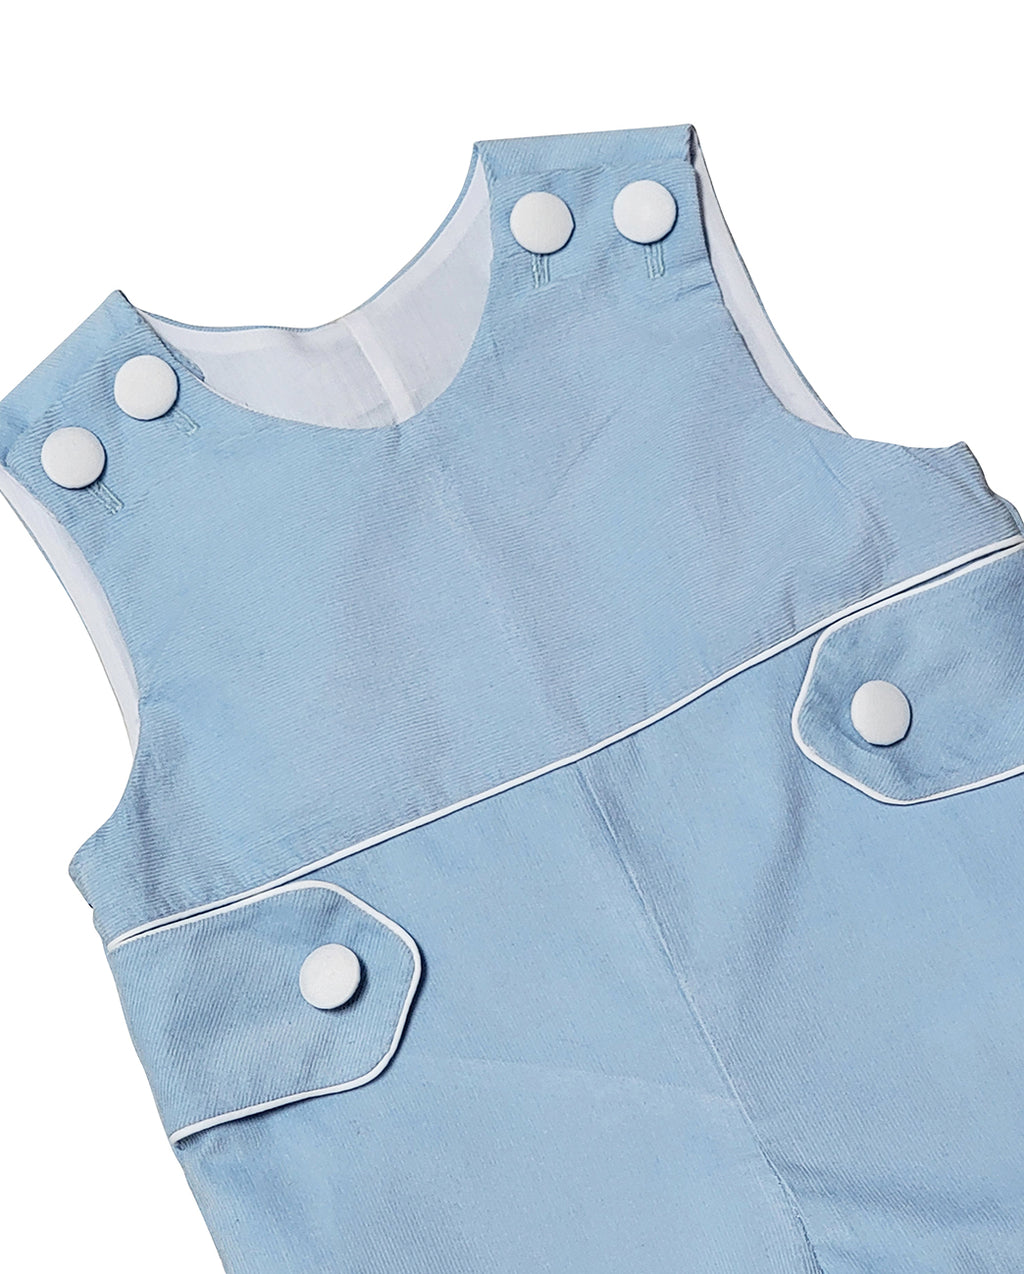 Boy's Blue Corduroy Overall - Little Threads Inc. Children's Clothing